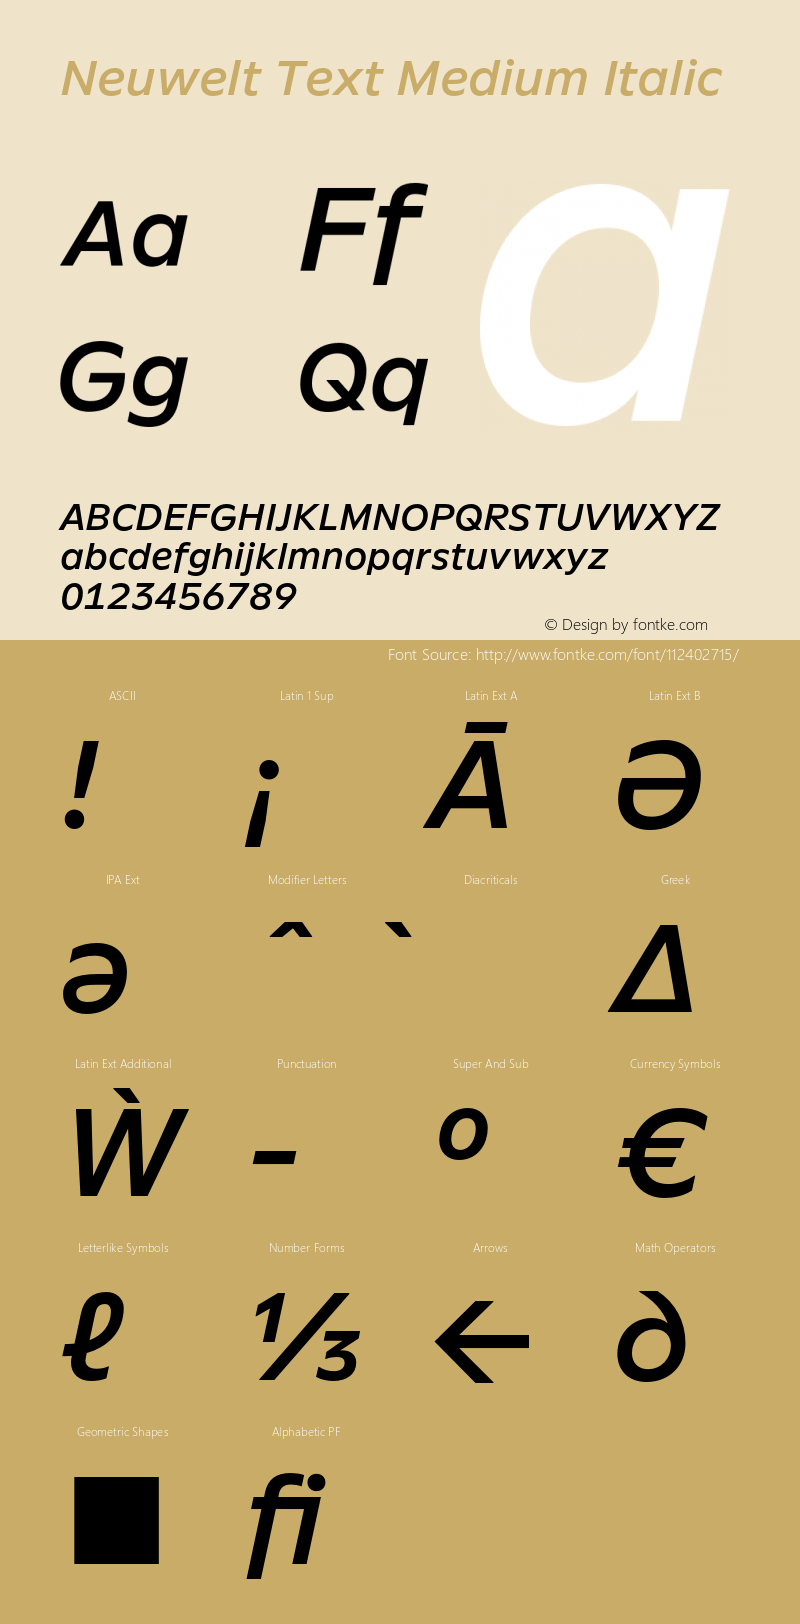 Neuwelt Text Medium Italic Version 1.00, build 19, g2.6.2 b1235, s3 Font Sample